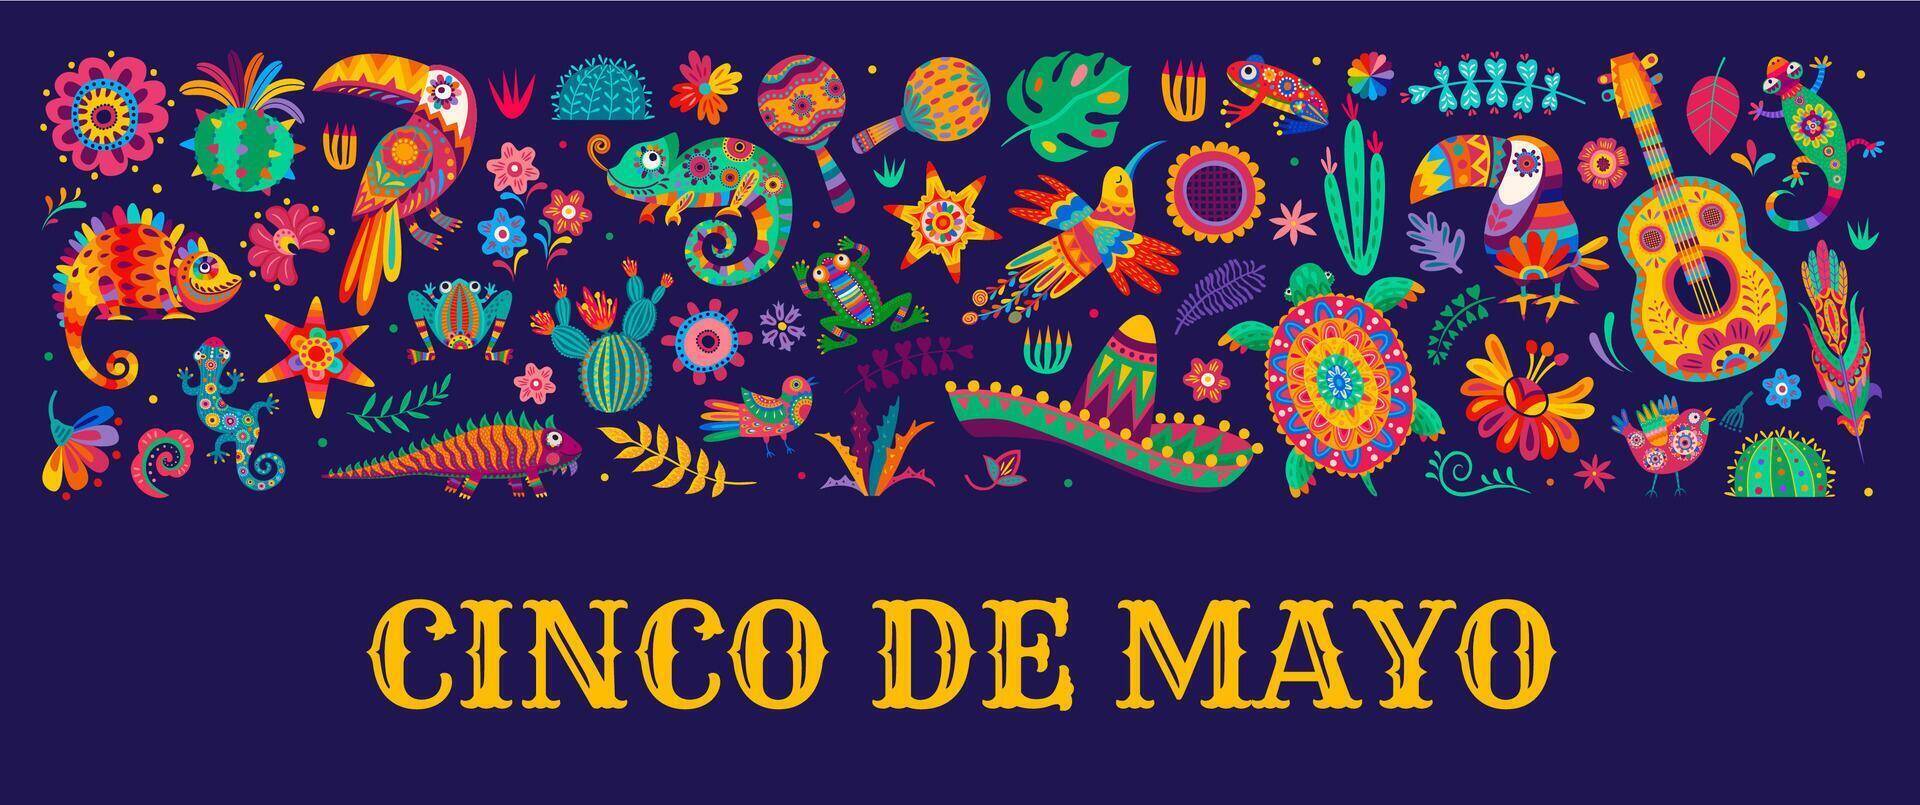 Mexican cinco de mayo holiday party vector banner